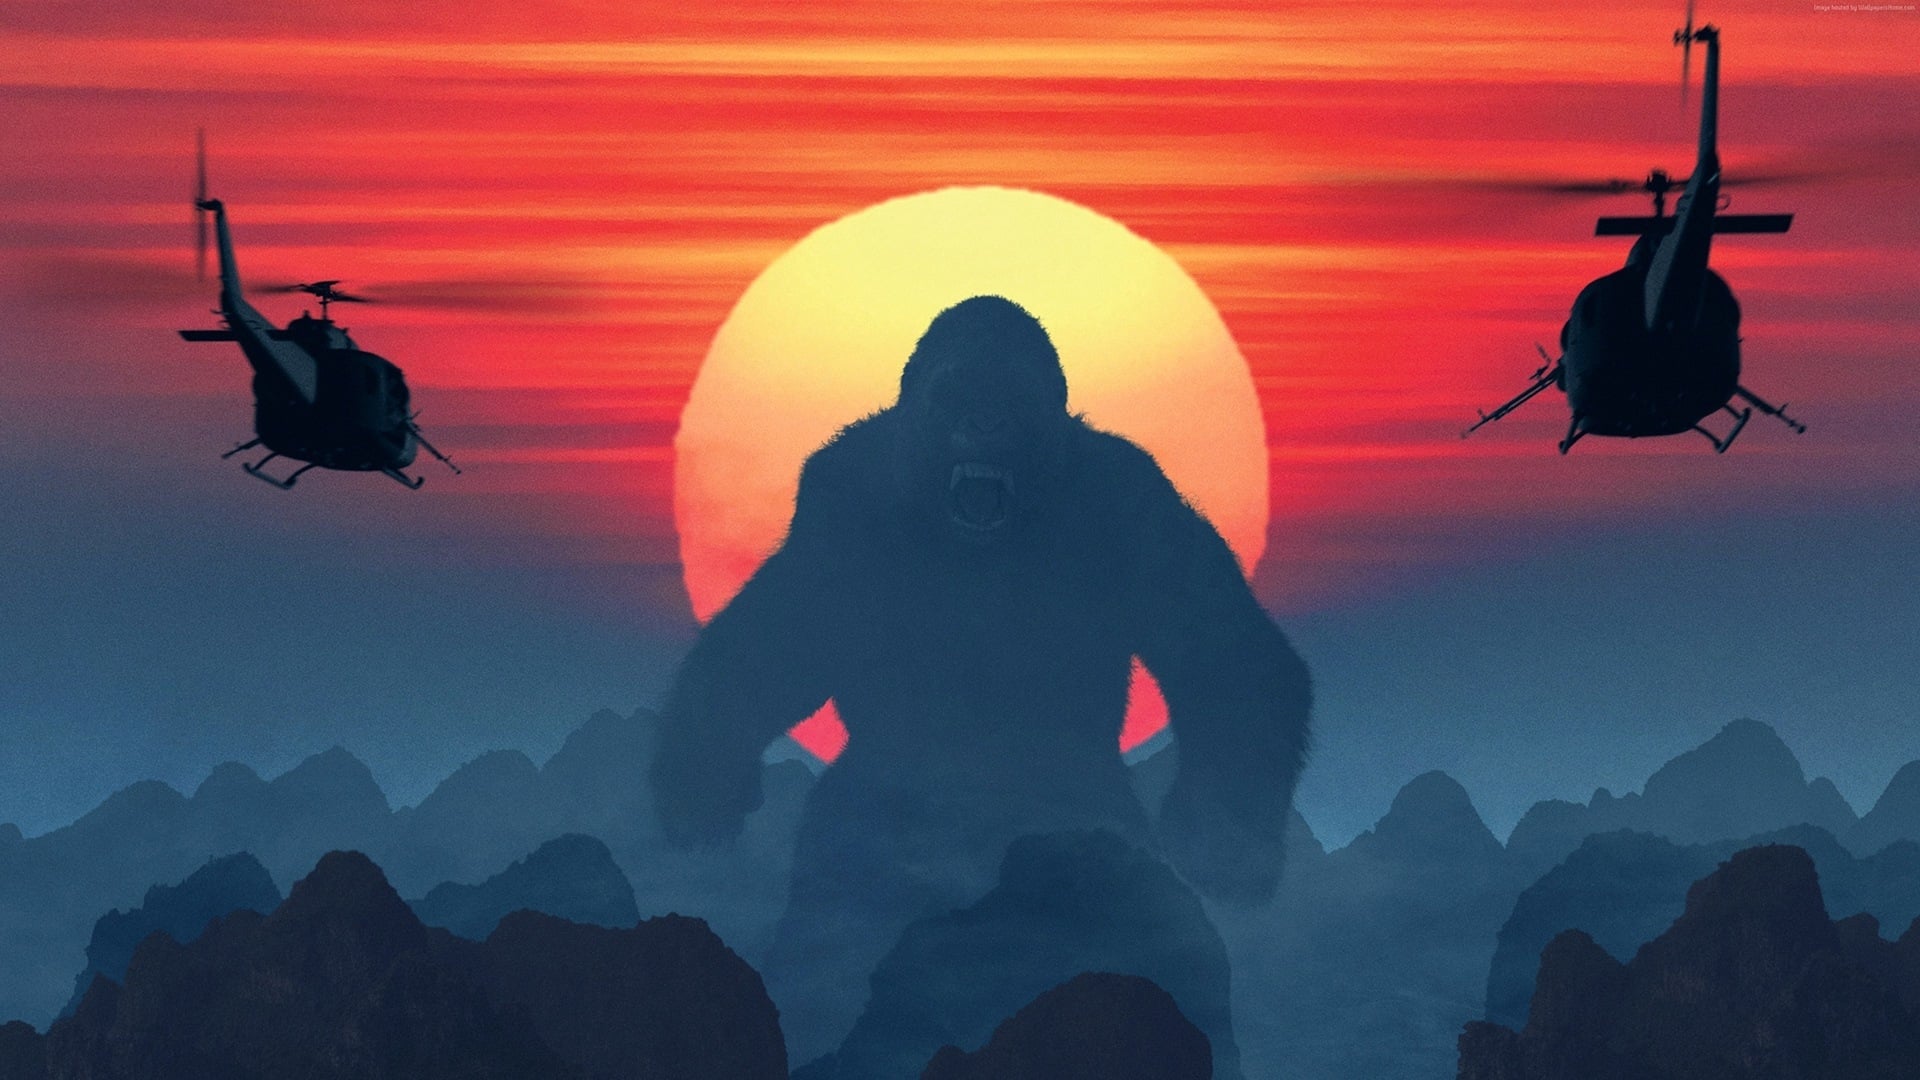 Image du film Kong : Skull Island itfliz3igcj4jkqvarssyhhvlhnjpg